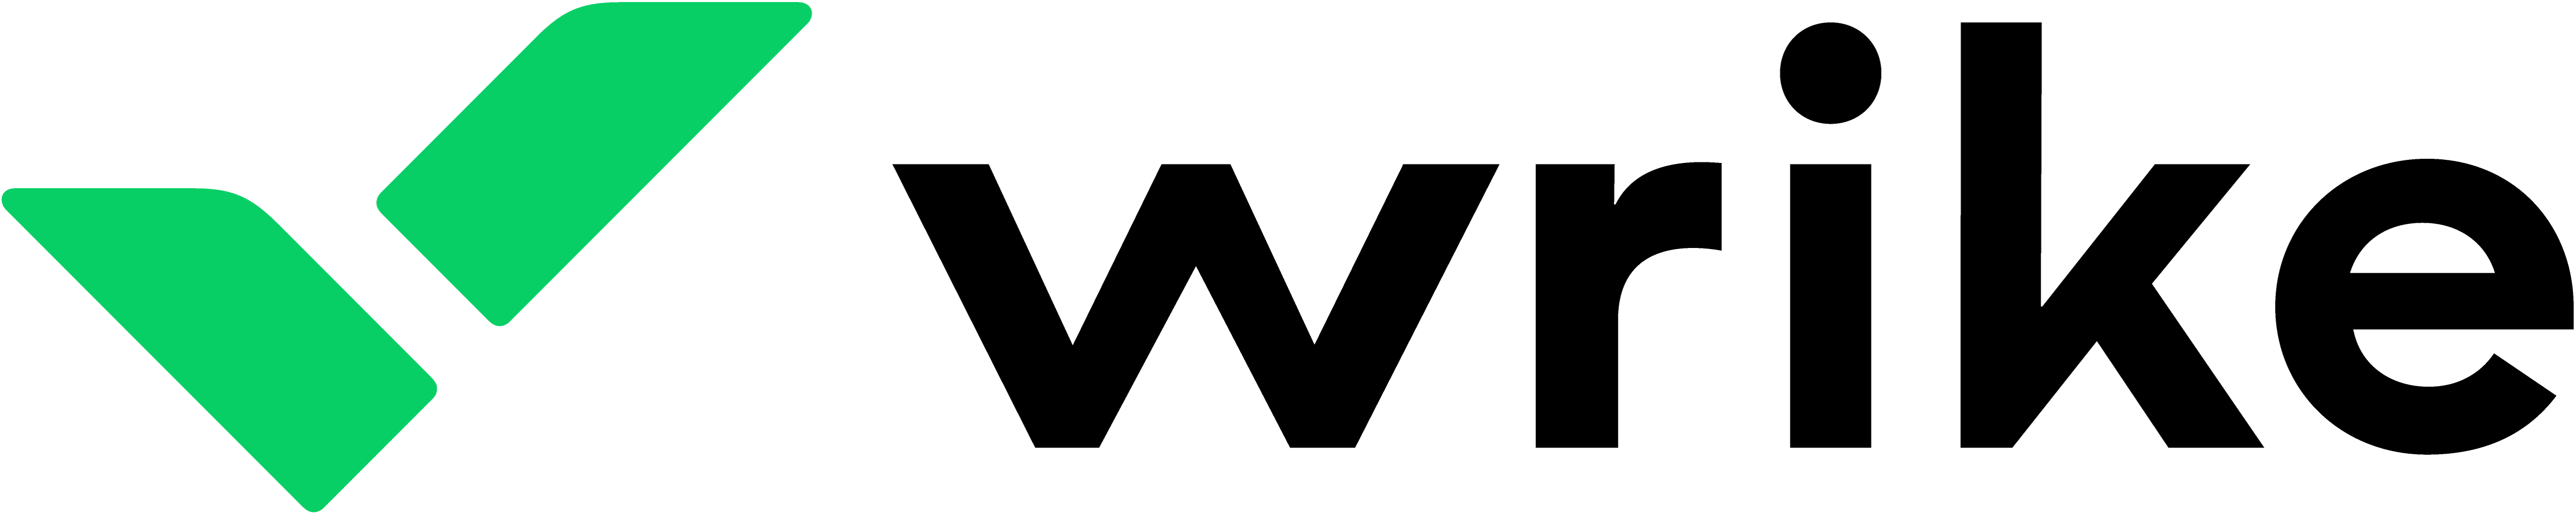 Wrike logo